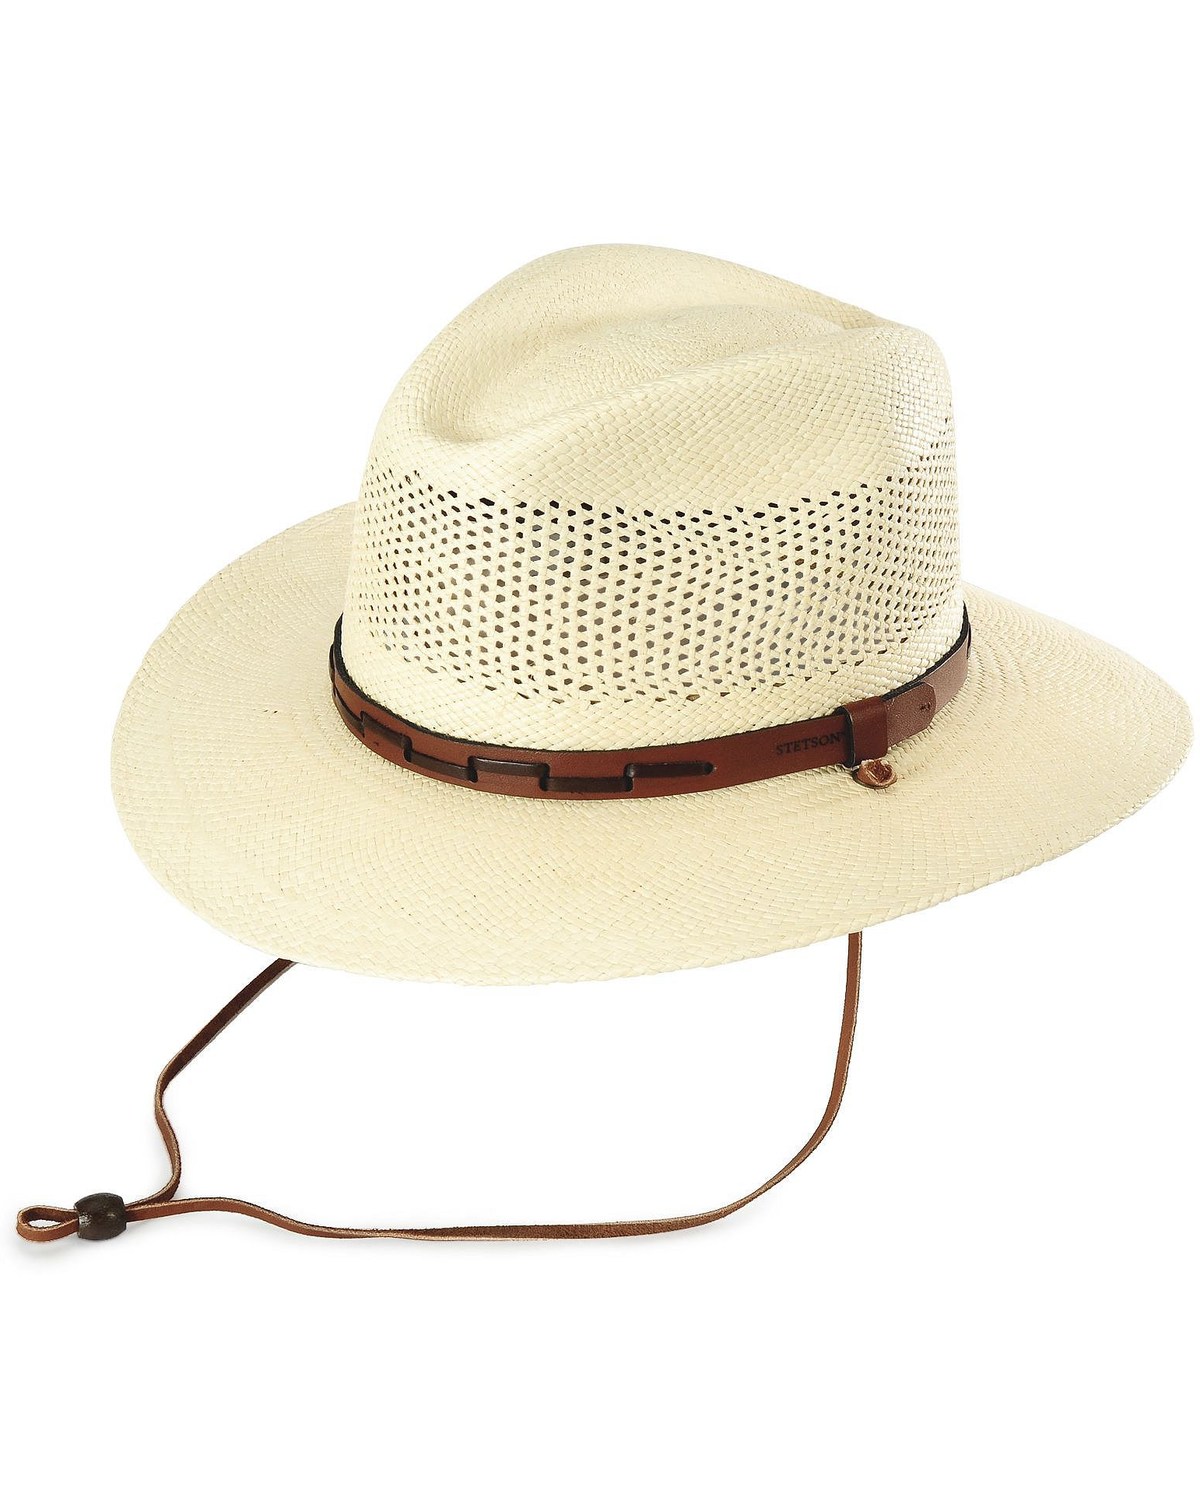 Stetson Men's Airway Panama Safari Hat